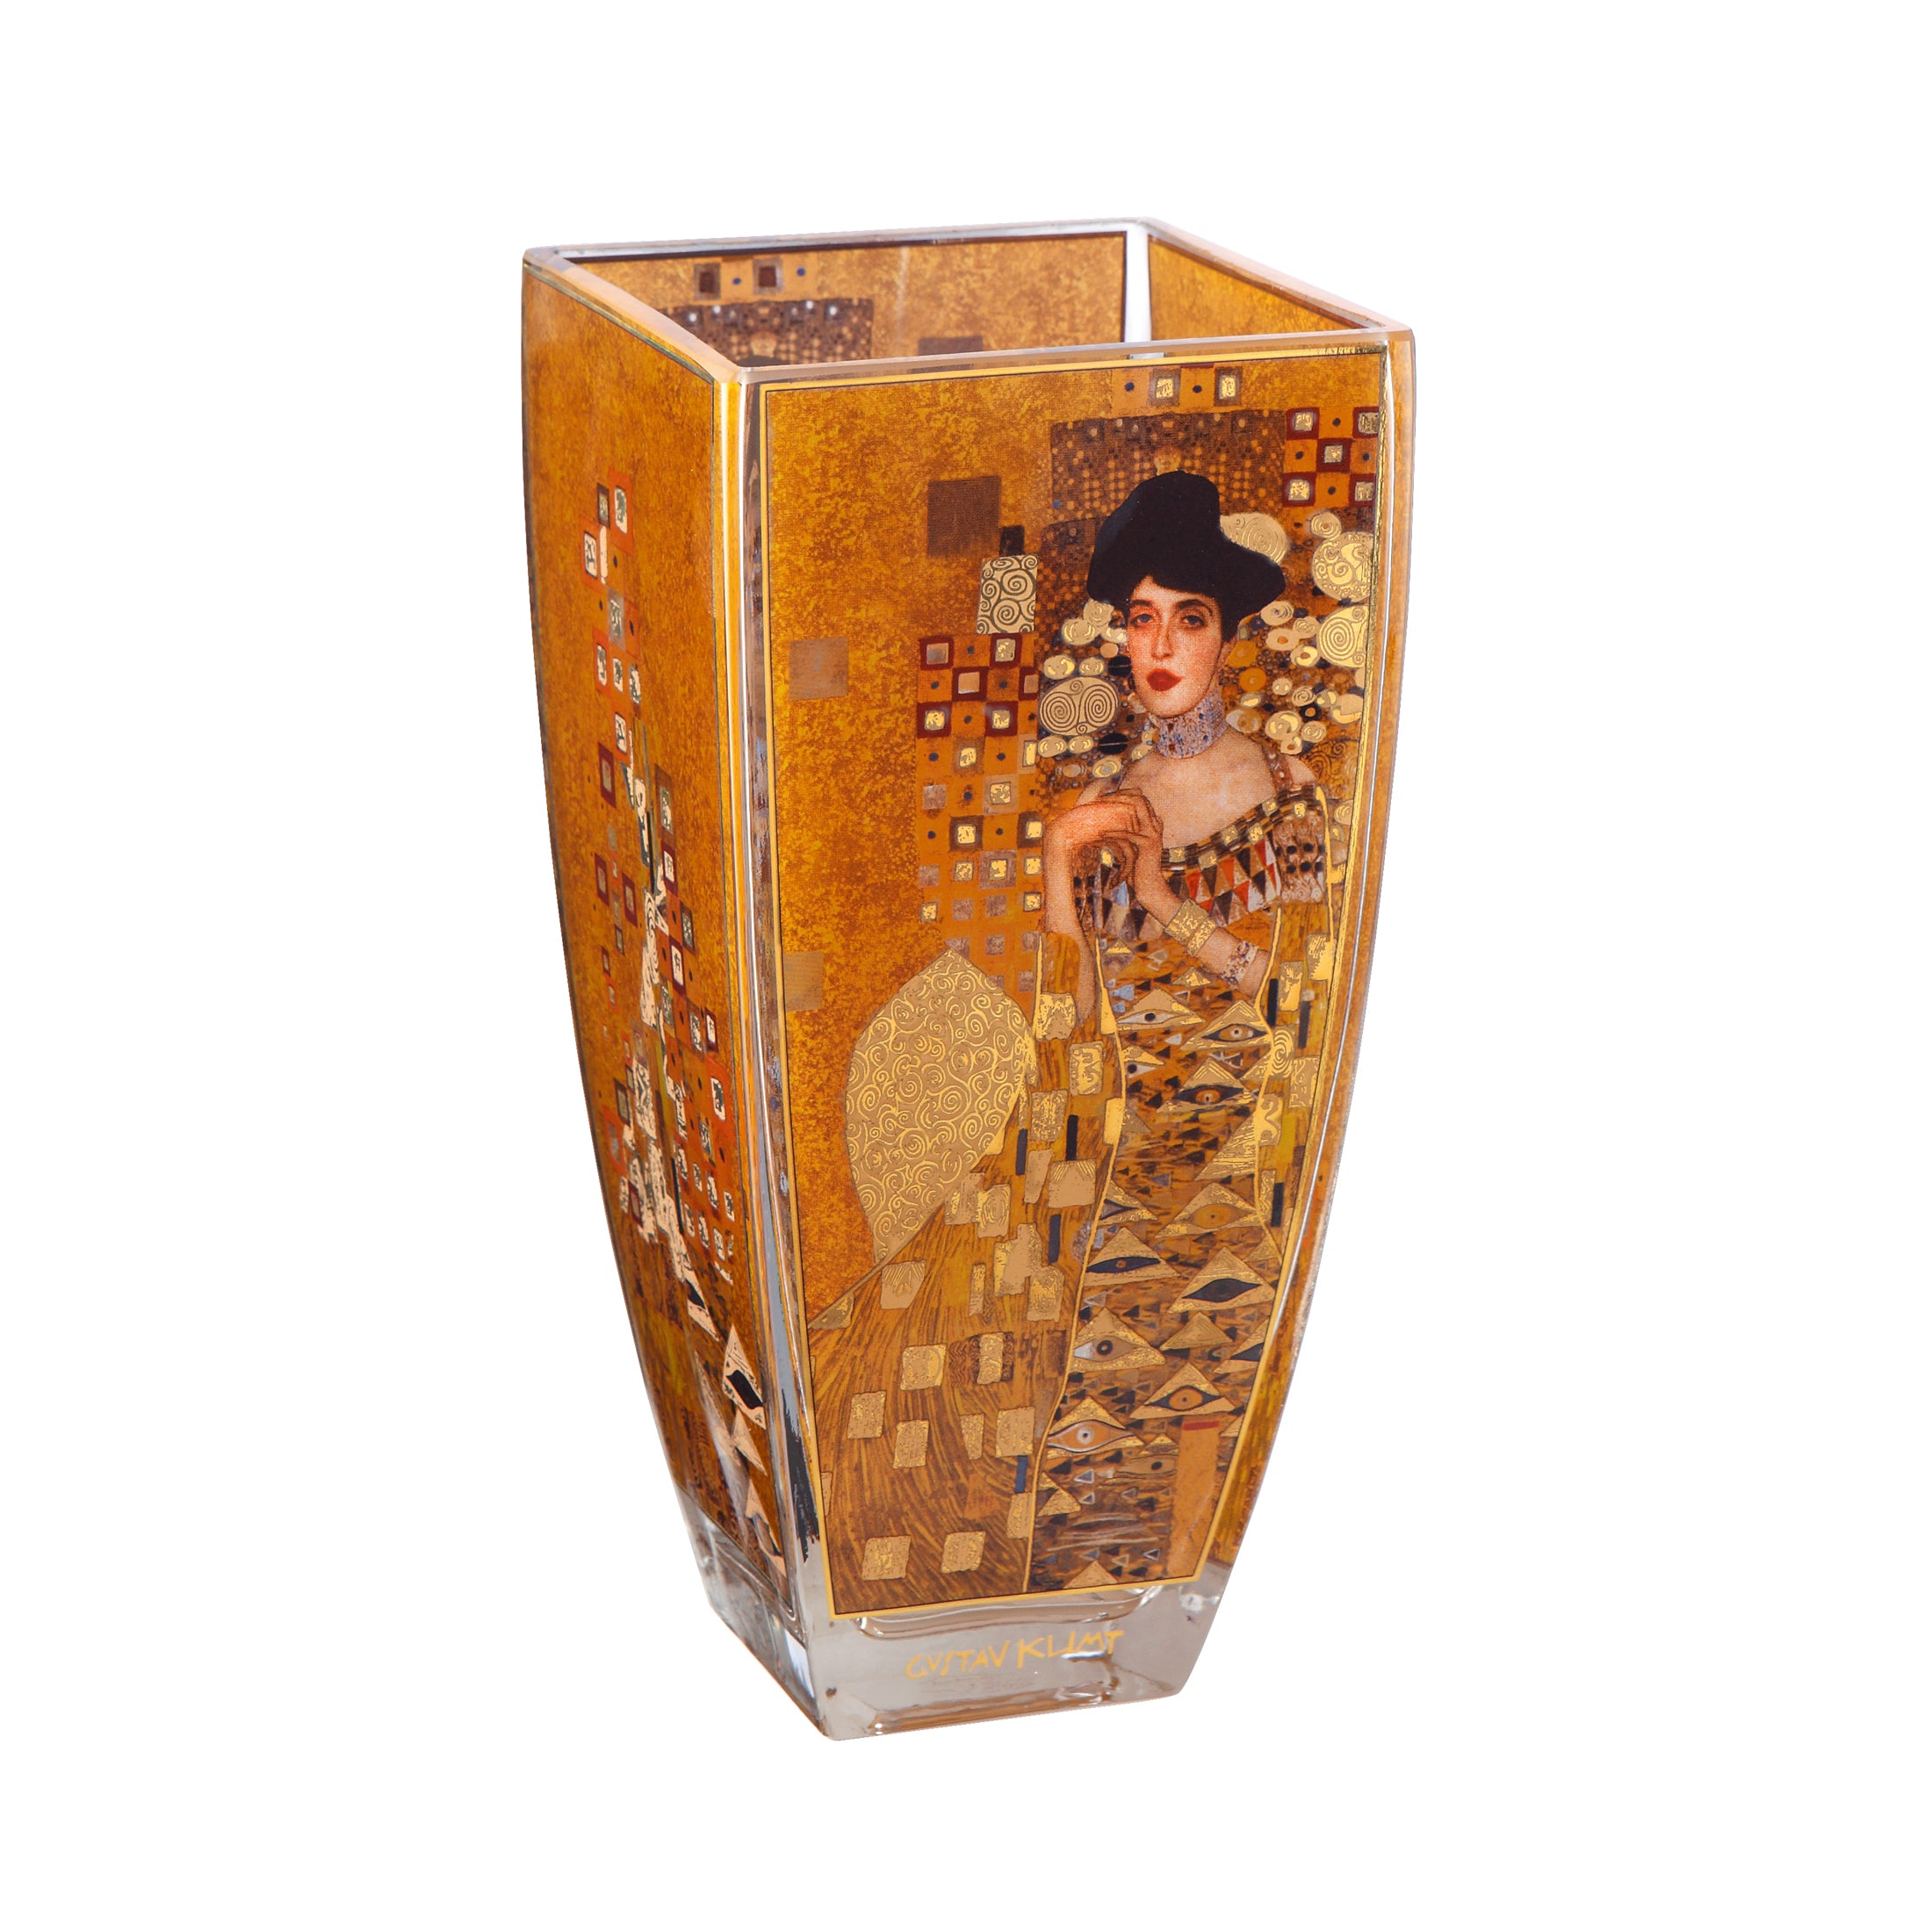 Goebel Artis Orbis Vase Adele Bloch-Bauer Gustav Klimt